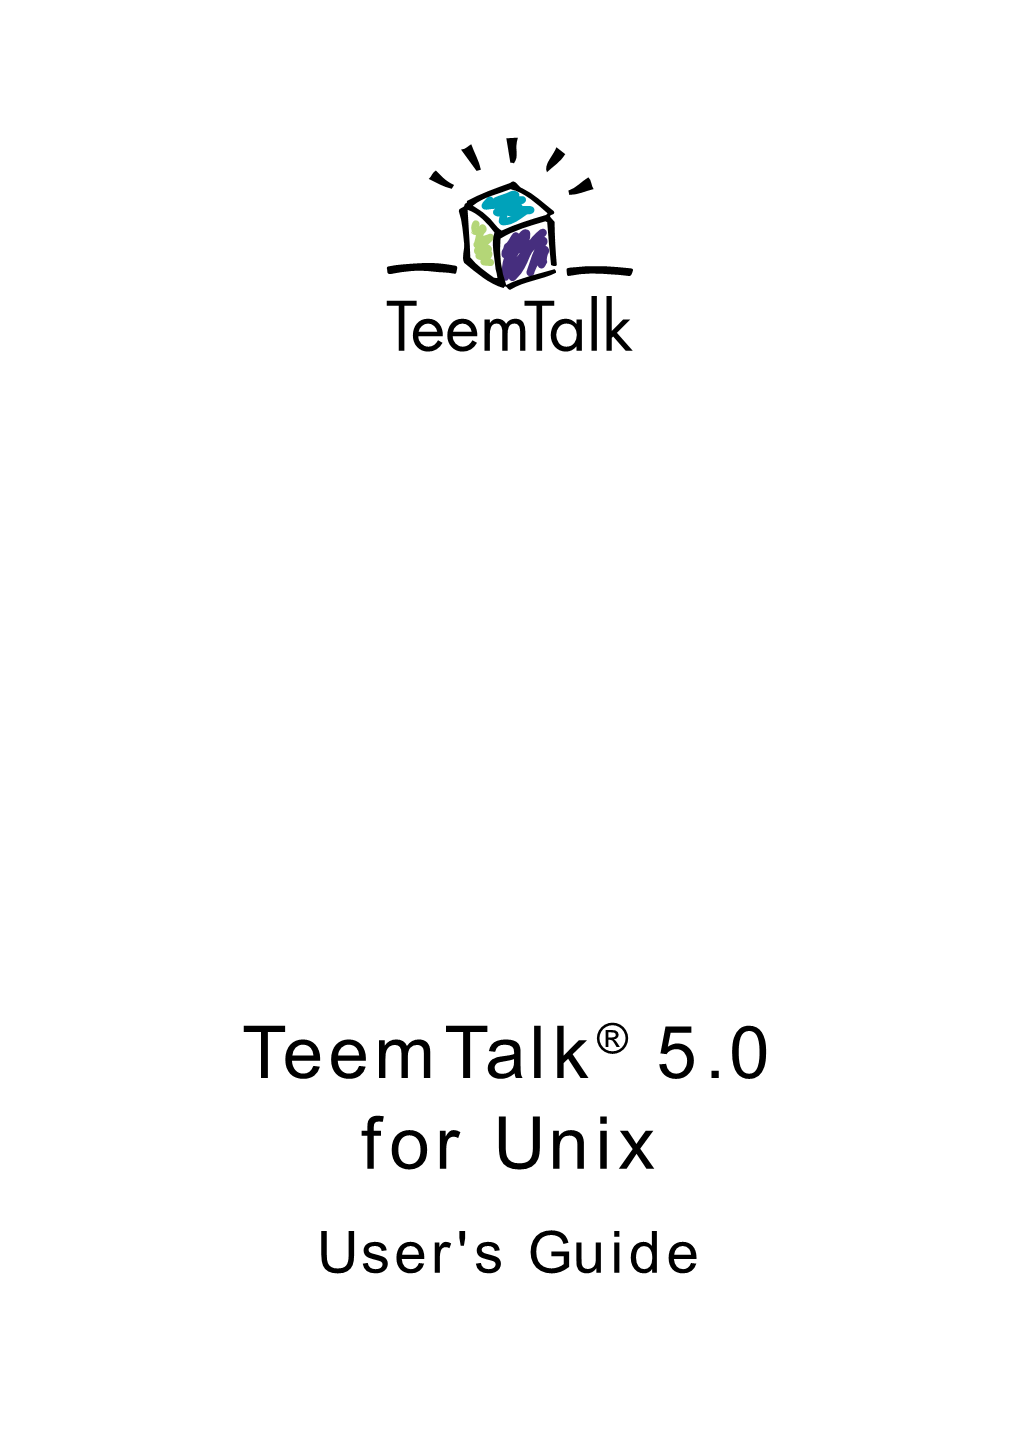 Teemtalk for Unix User's Guide V